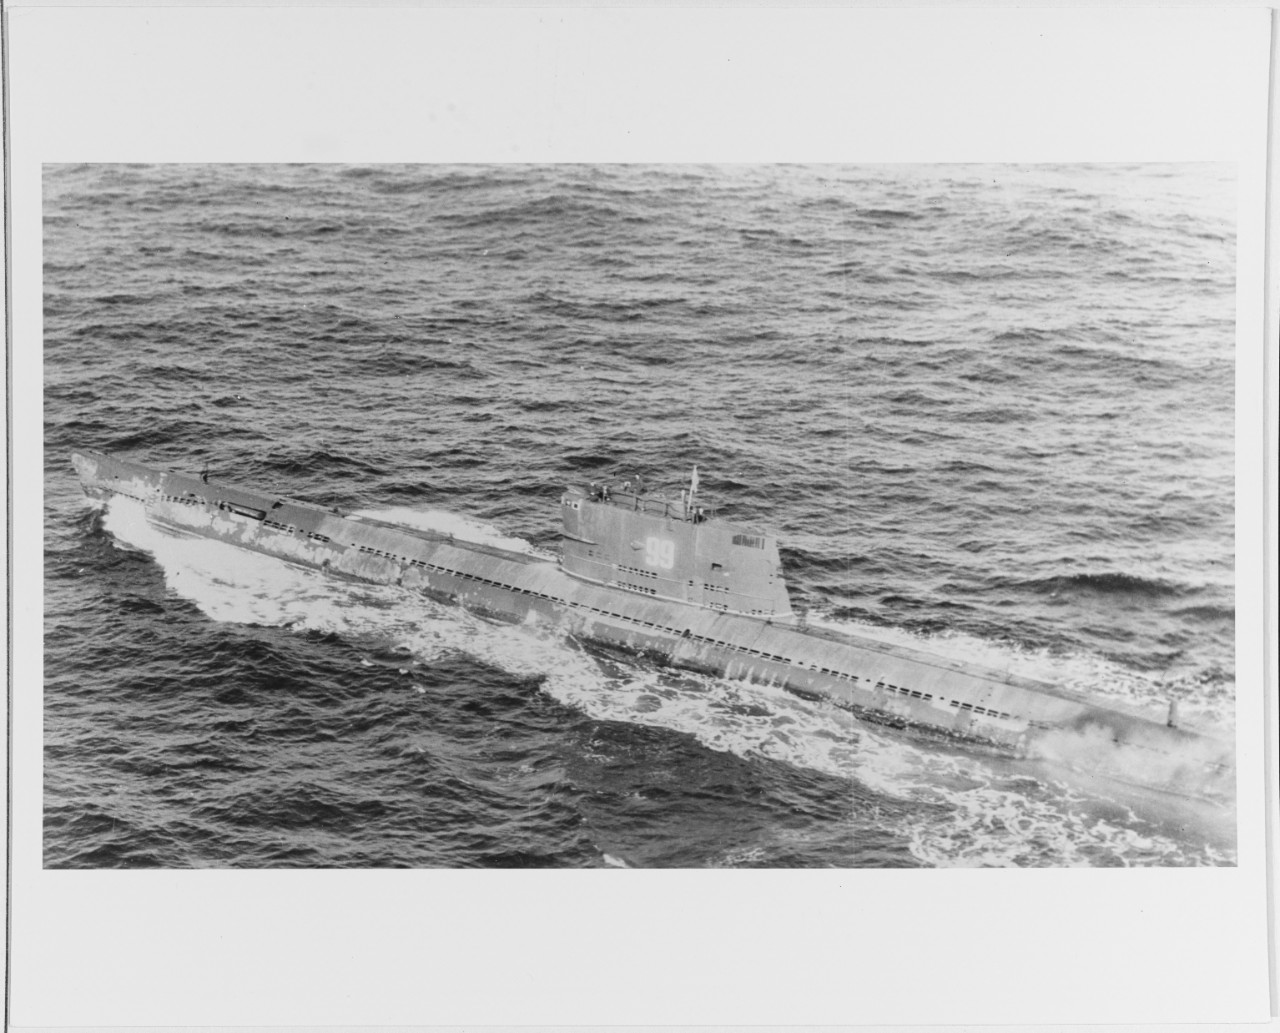 Soviet Z Class Submarine